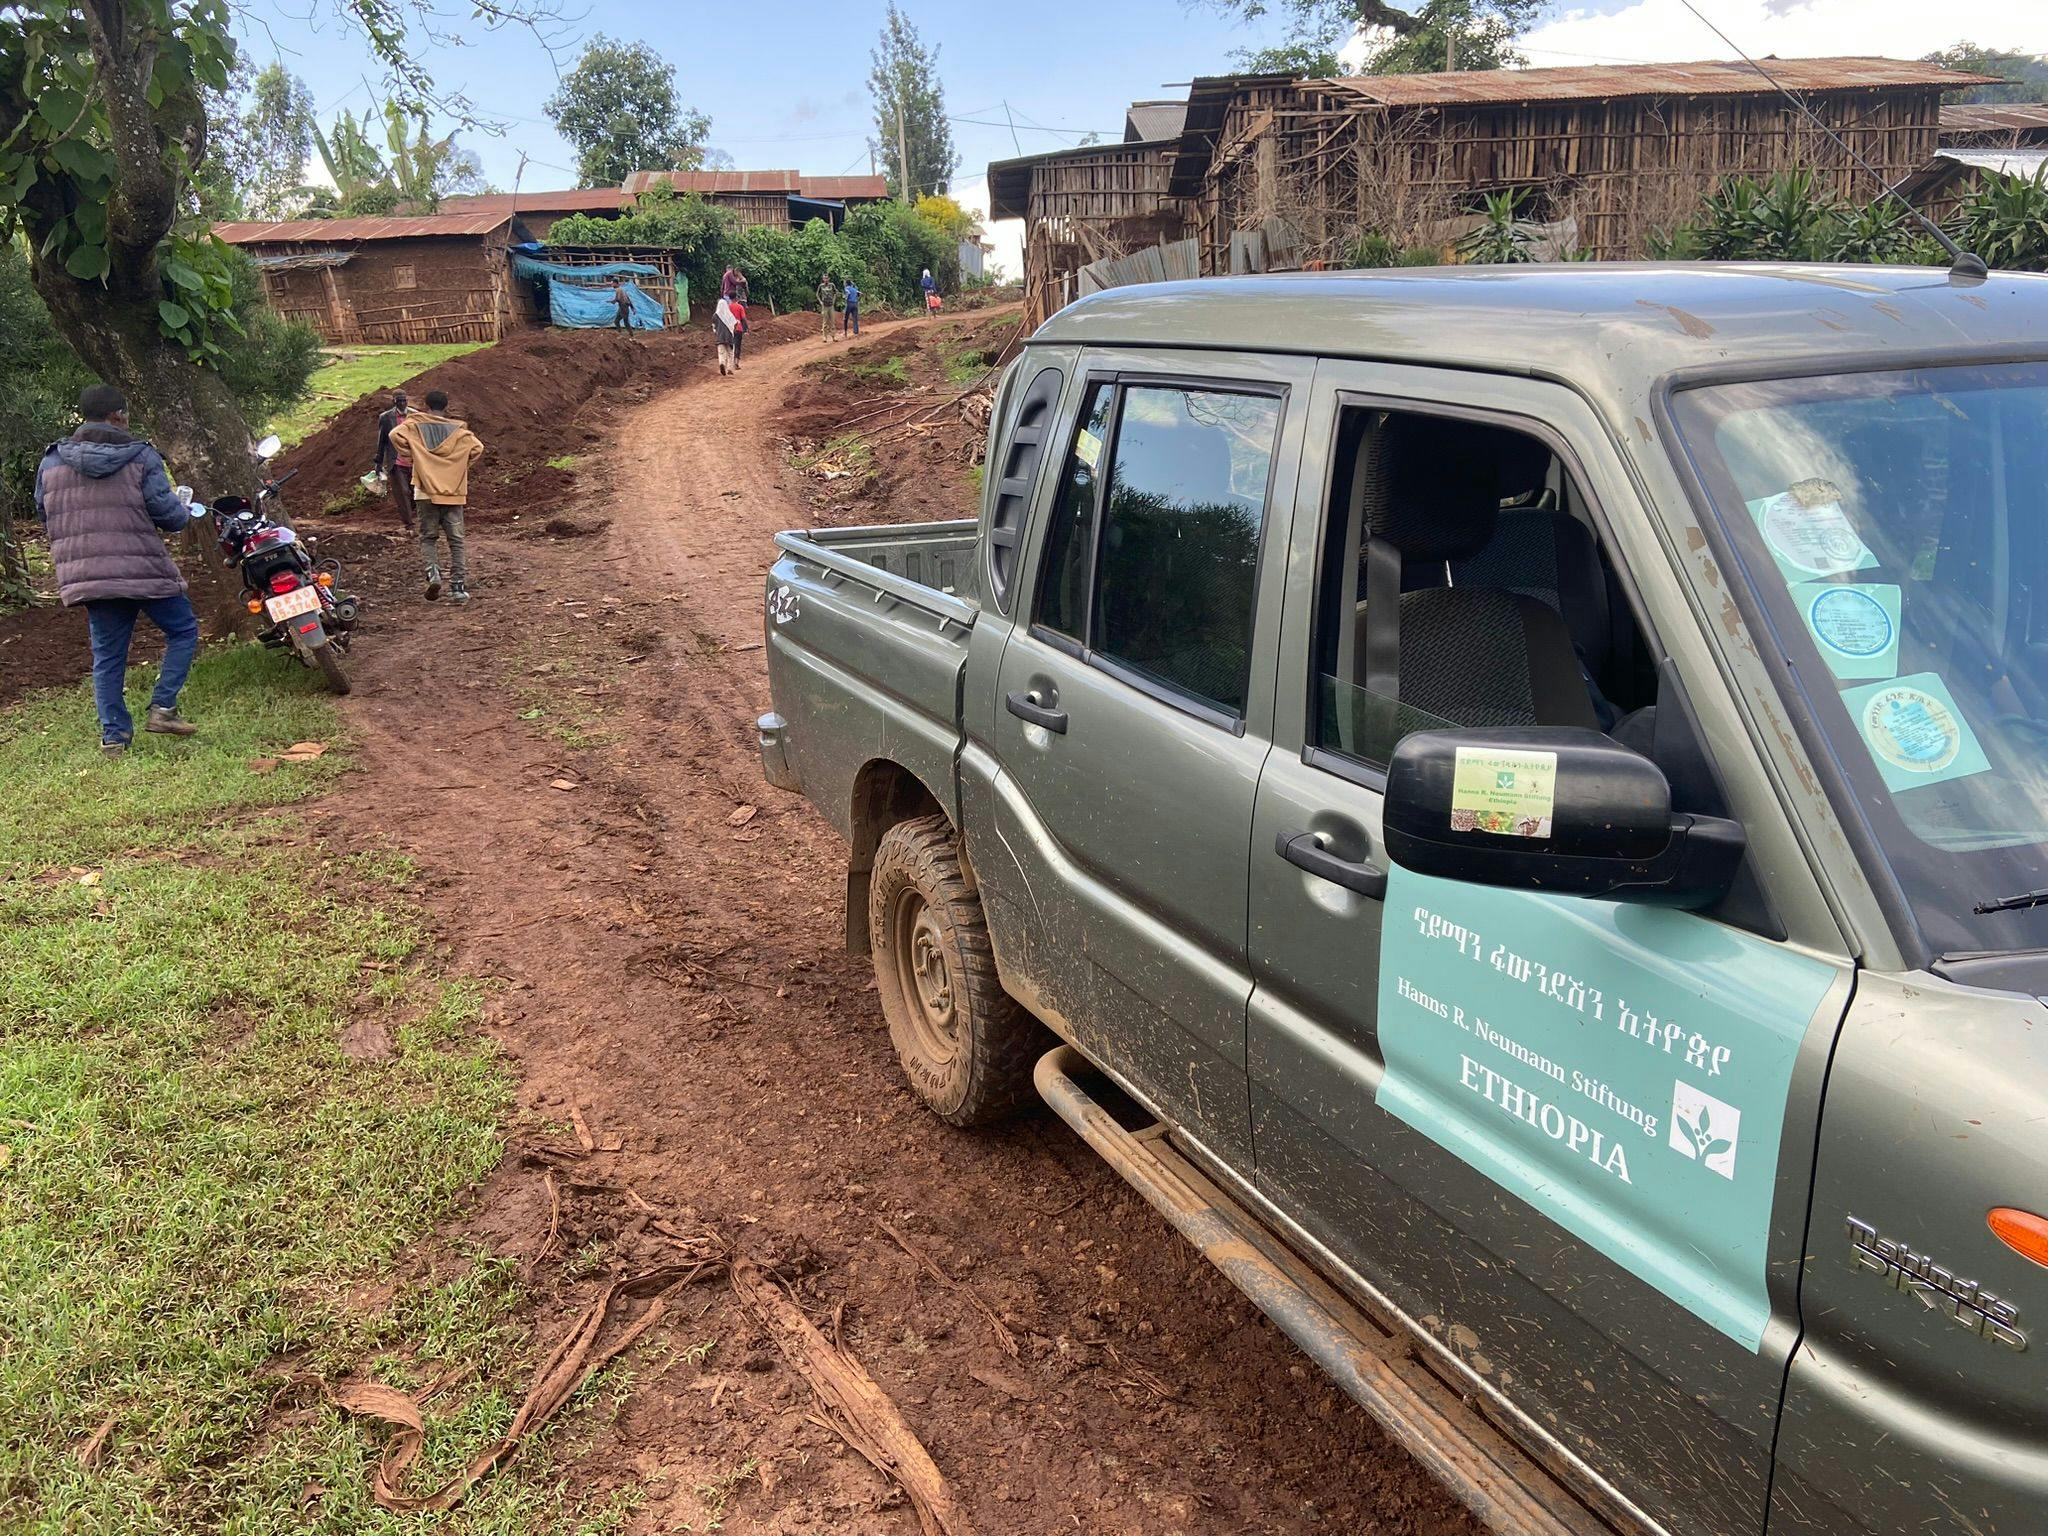 A HRNS car in a remote Ethiopian Village